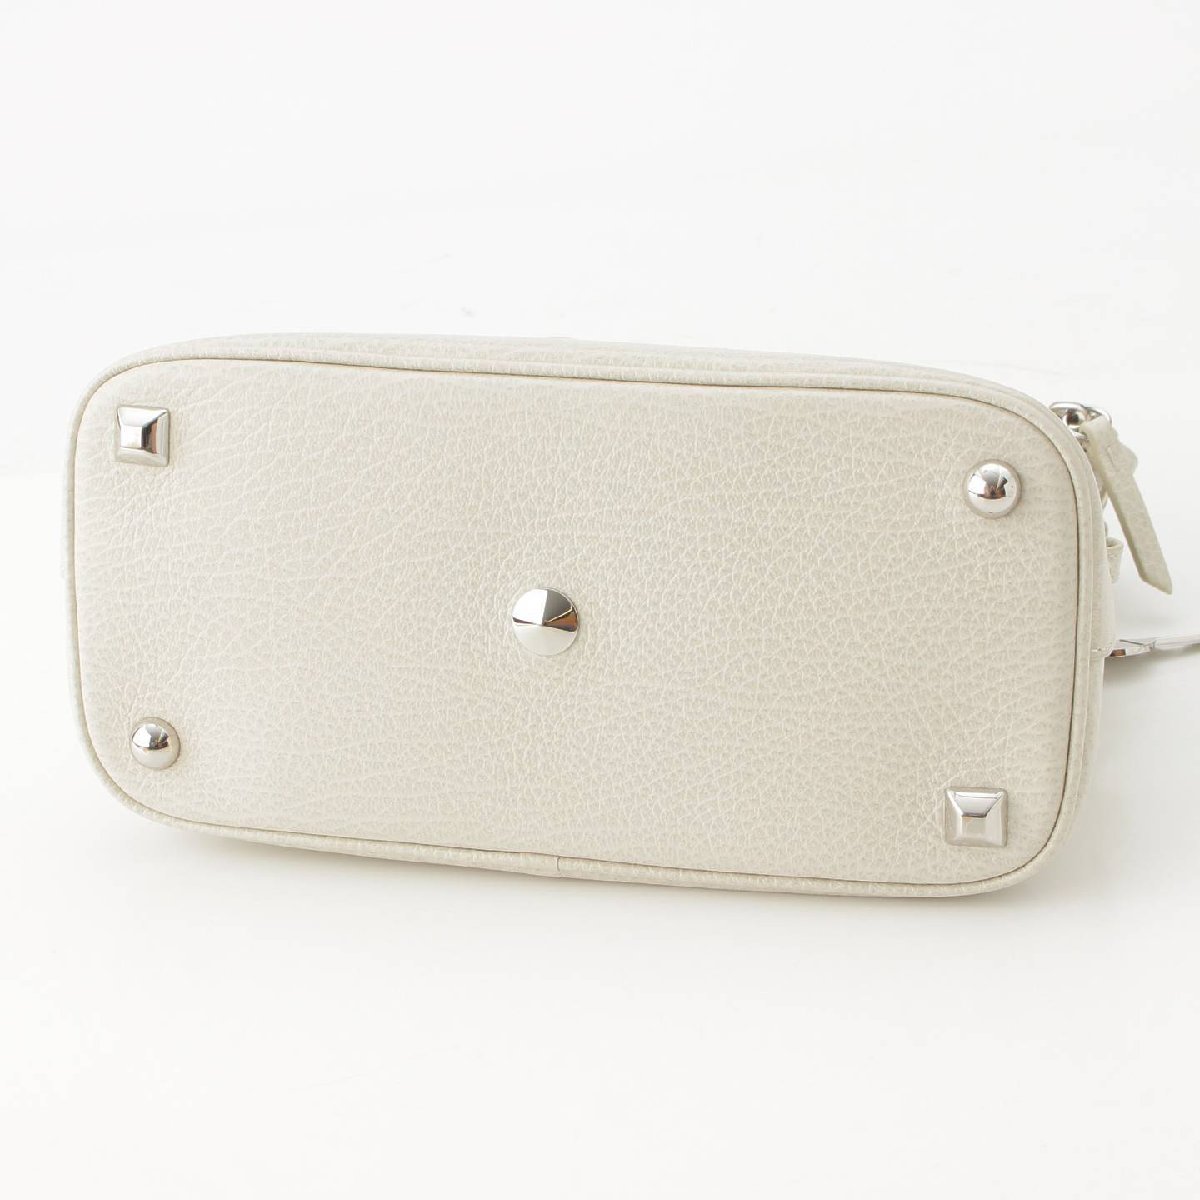 [ mezzo n Margiela ]Maison Margiela 5AC leather 2way handbag S56WG0082 white [ used ][ regular goods guarantee ]193252